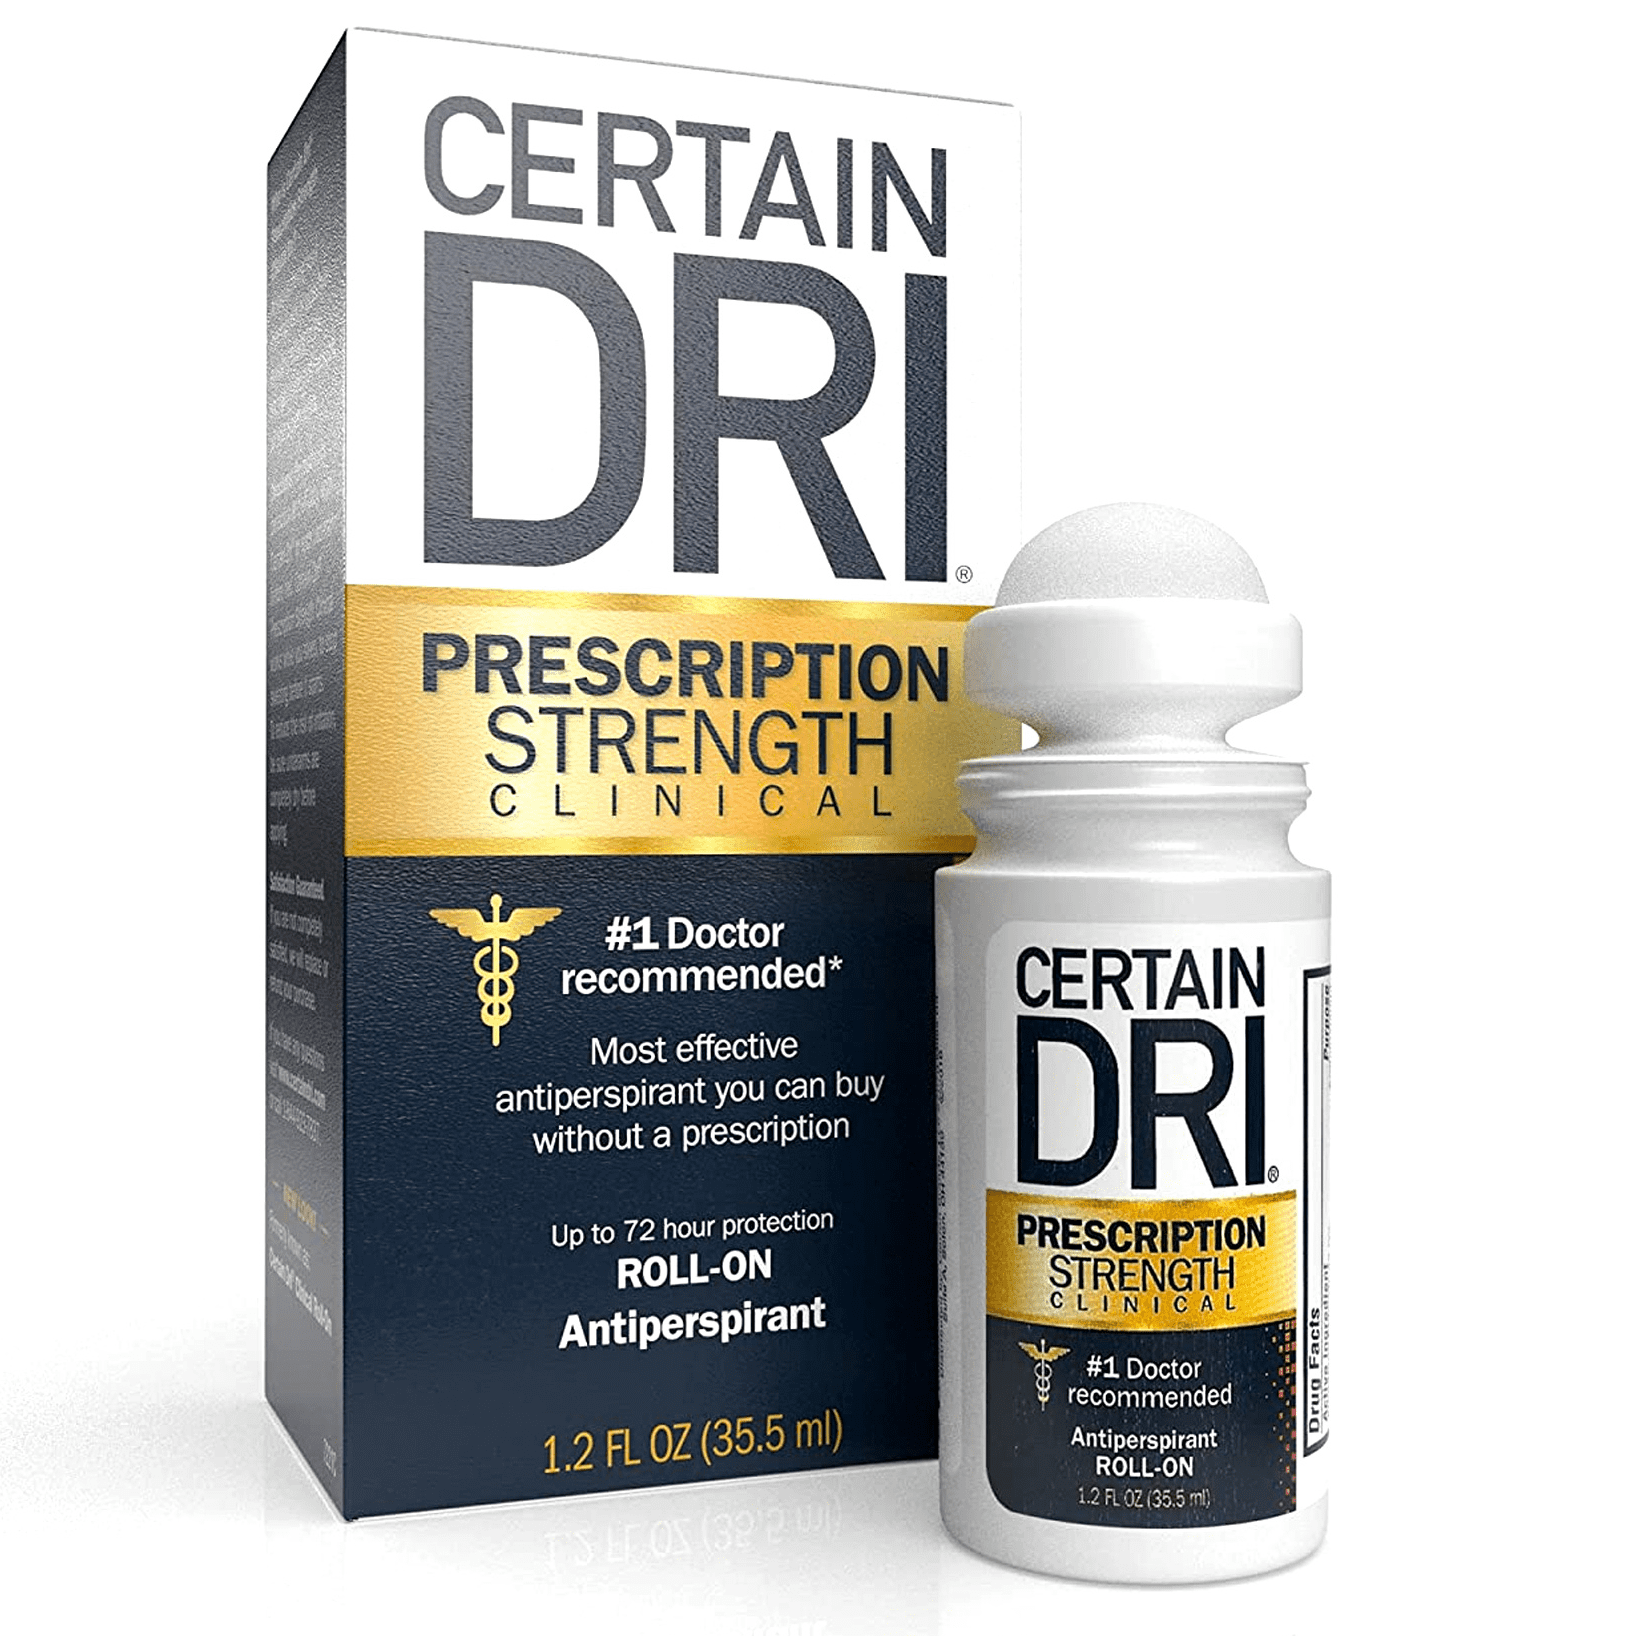 Certain Dri Prescription Strength Clinical Antiperspirant & Deodorant, Roll-On, 1.2 oz.